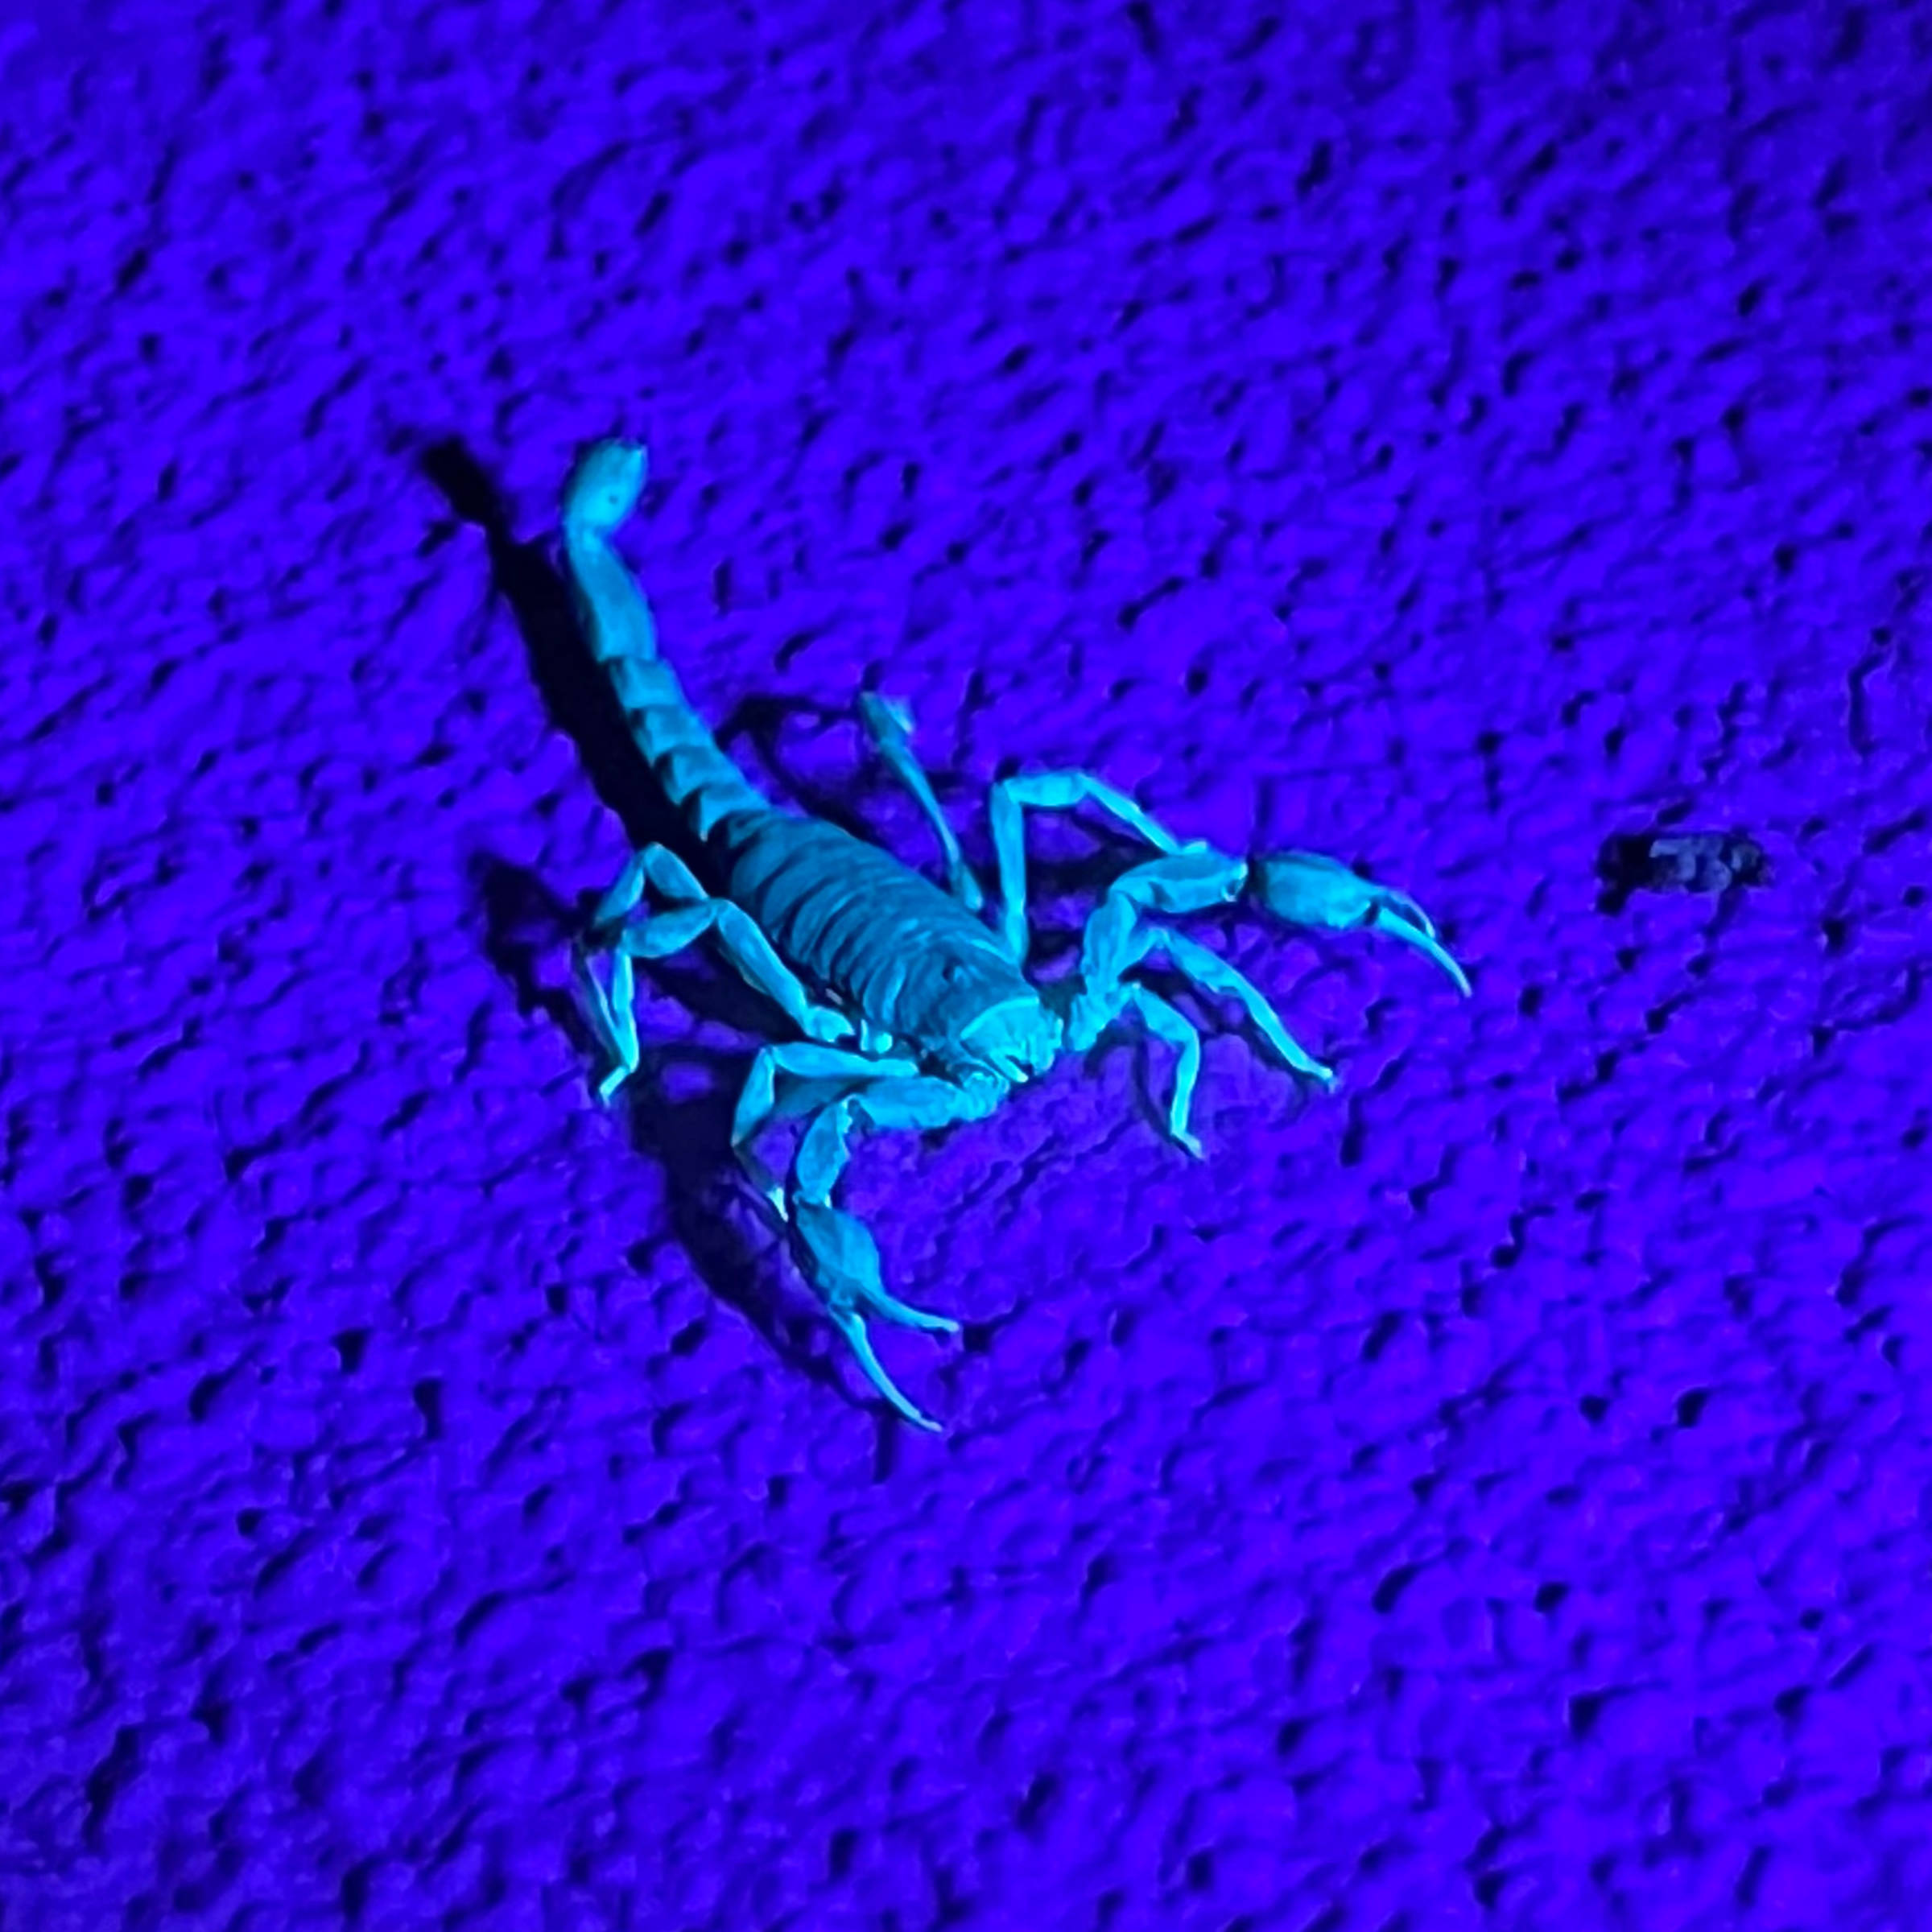 Wood scorpion under UV light. Photo: Clare Hawkins.